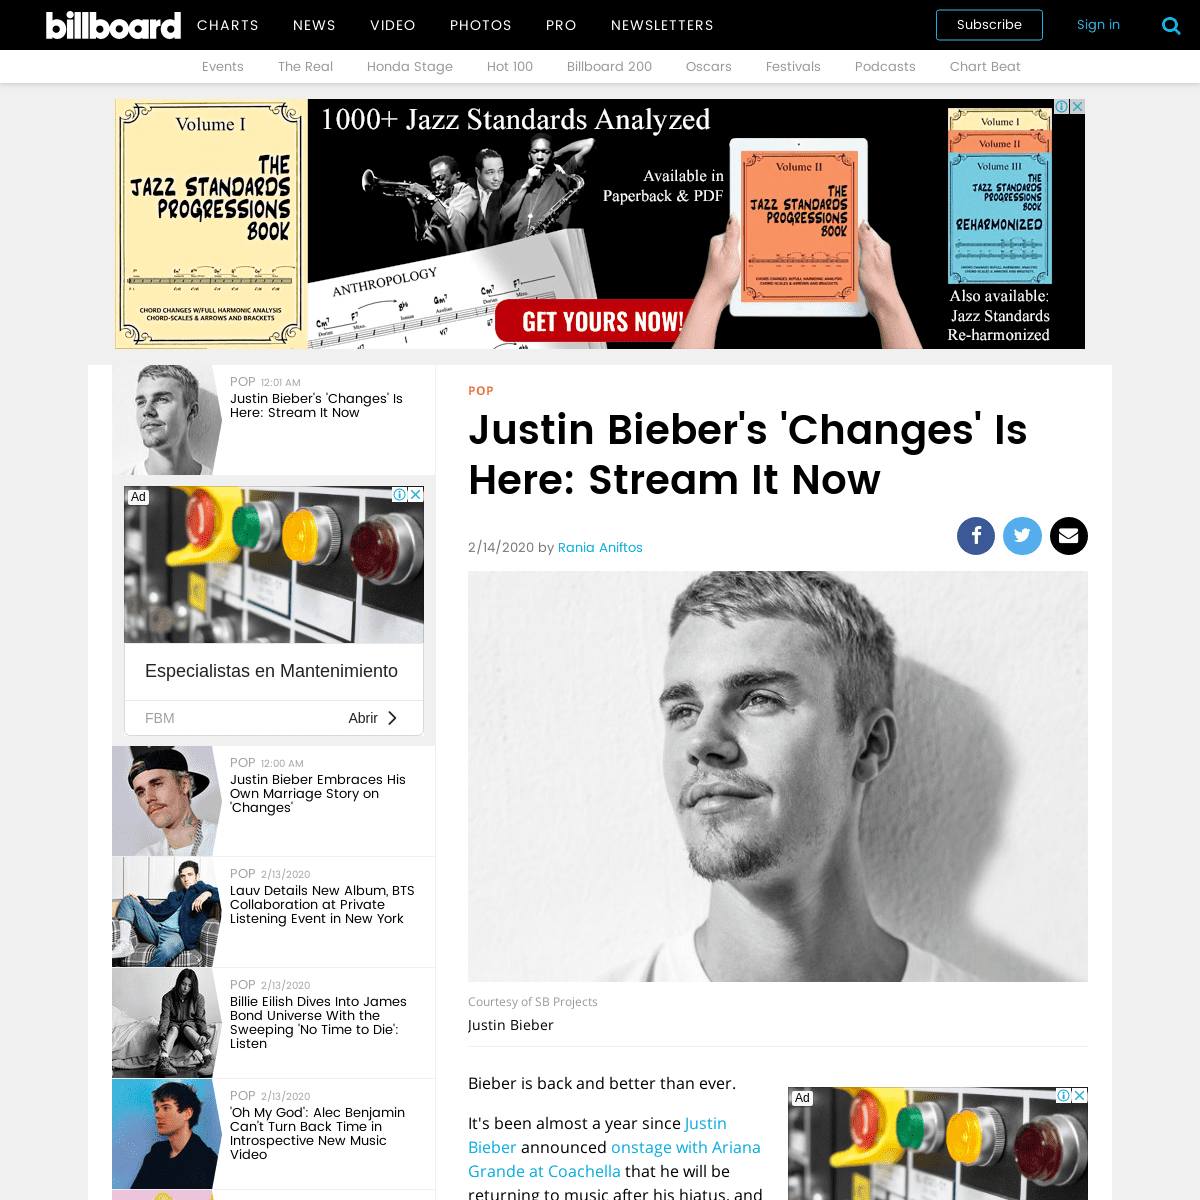 A complete backup of www.billboard.com/articles/columns/pop/8550983/justin-bieber-changes-album-stream